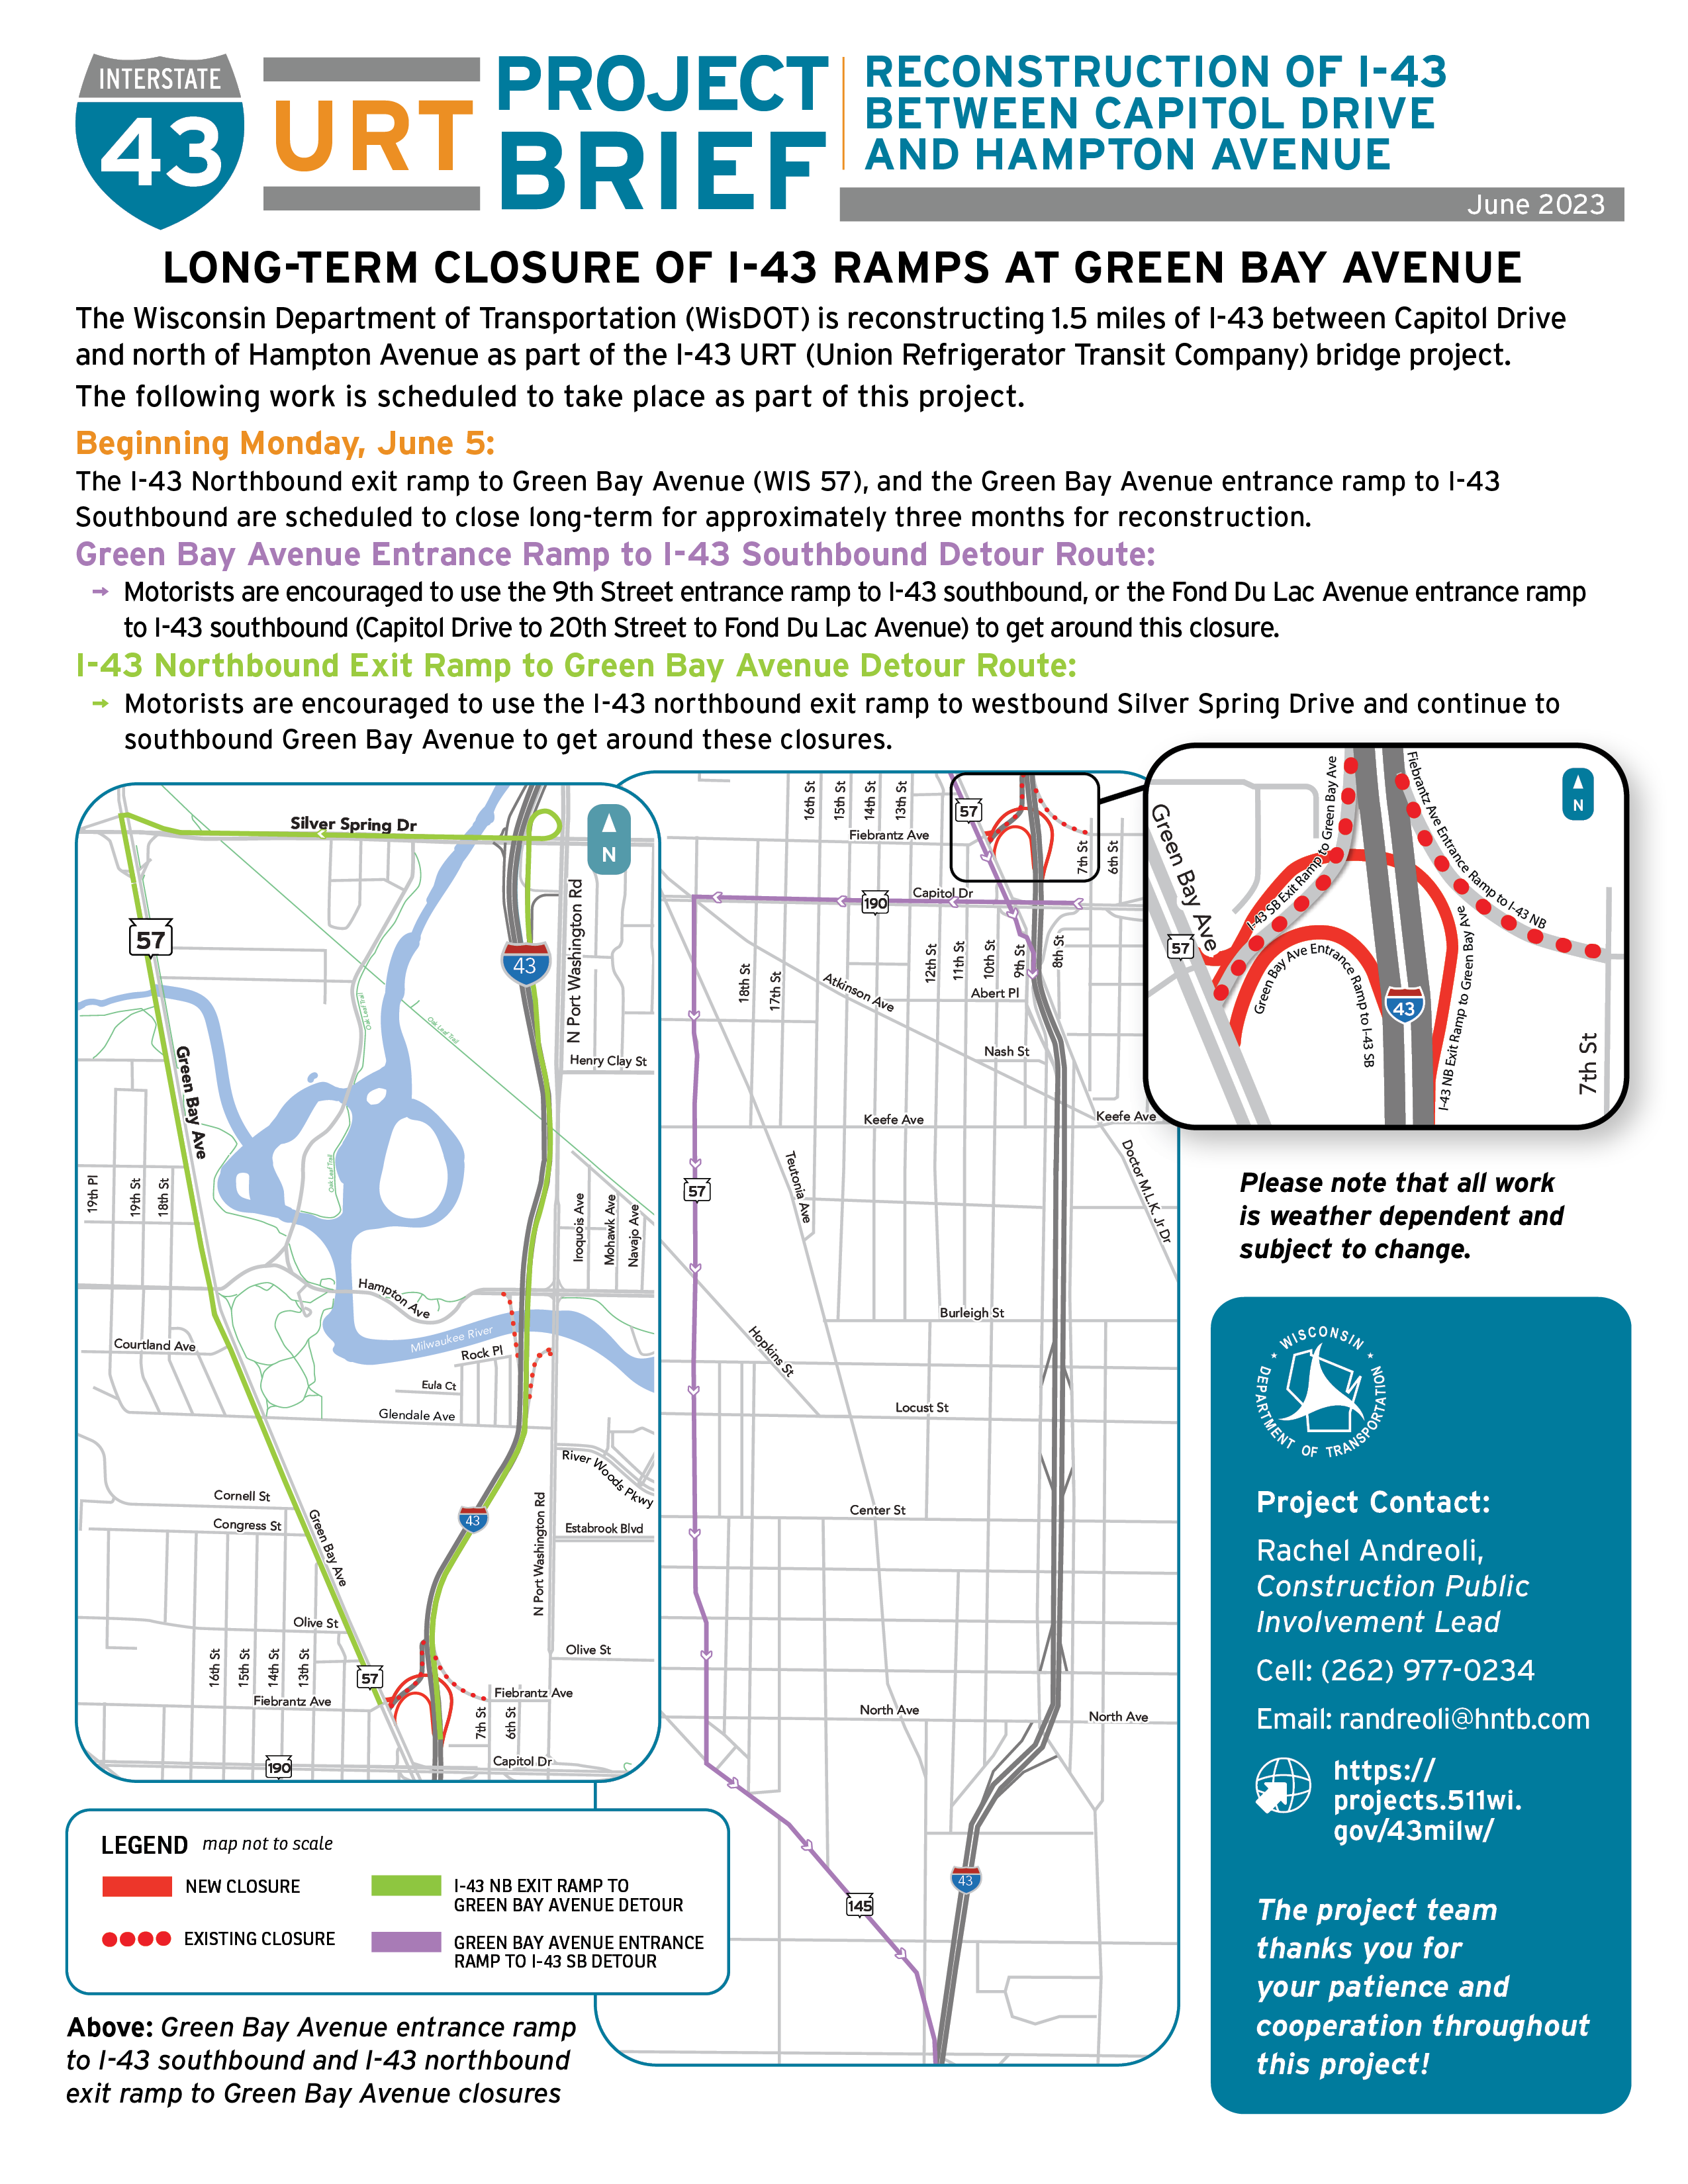 June 5, Long-term Closure of I-43 Ramps at Green Bay Avenue